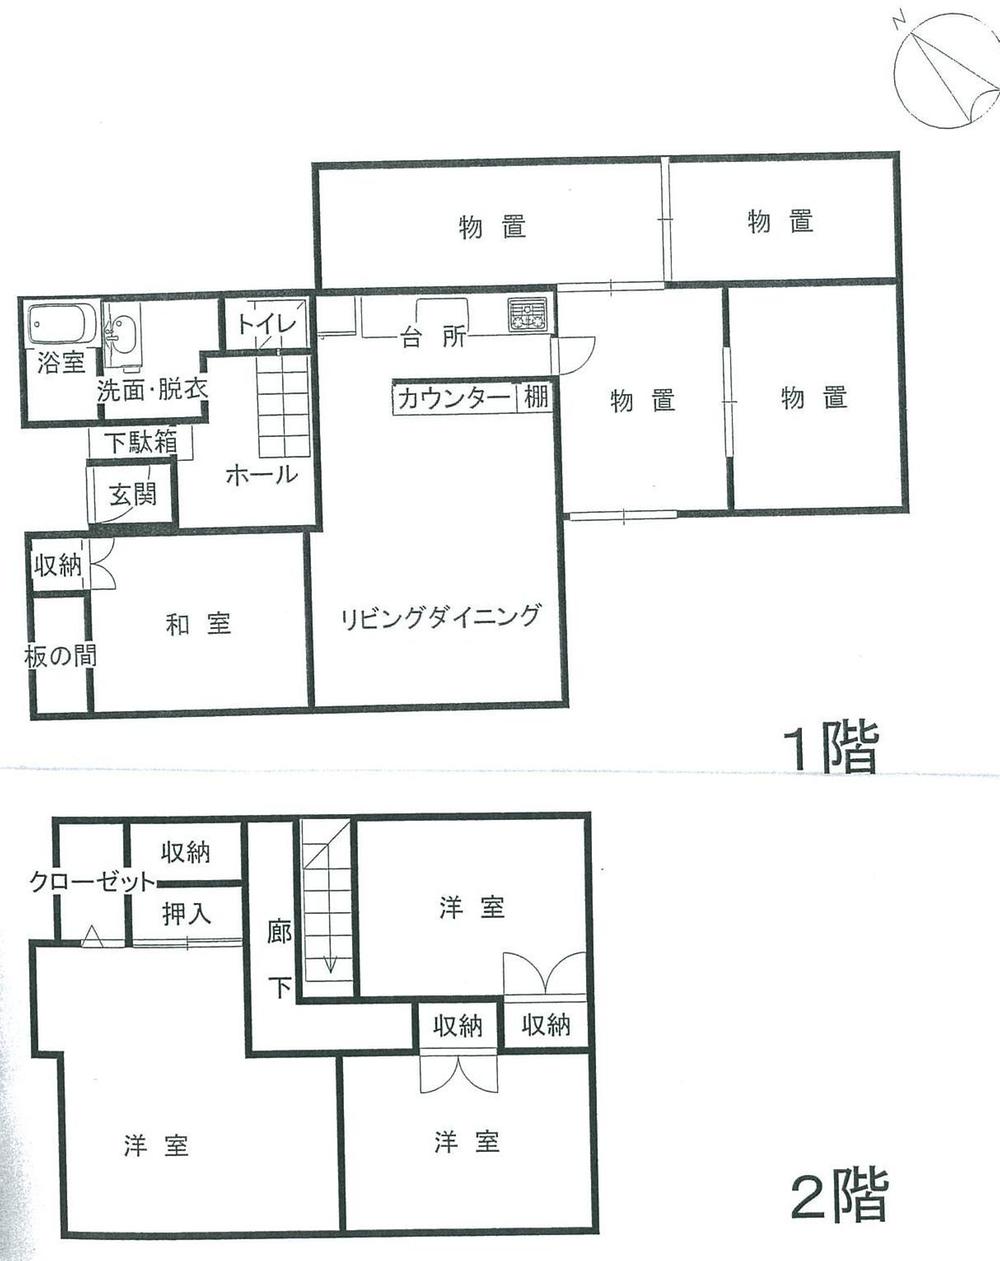 Floor plan. 7.8 million yen, 4LDK + 3S (storeroom), Land area 572.18 sq m , Building area 141.6 sq m